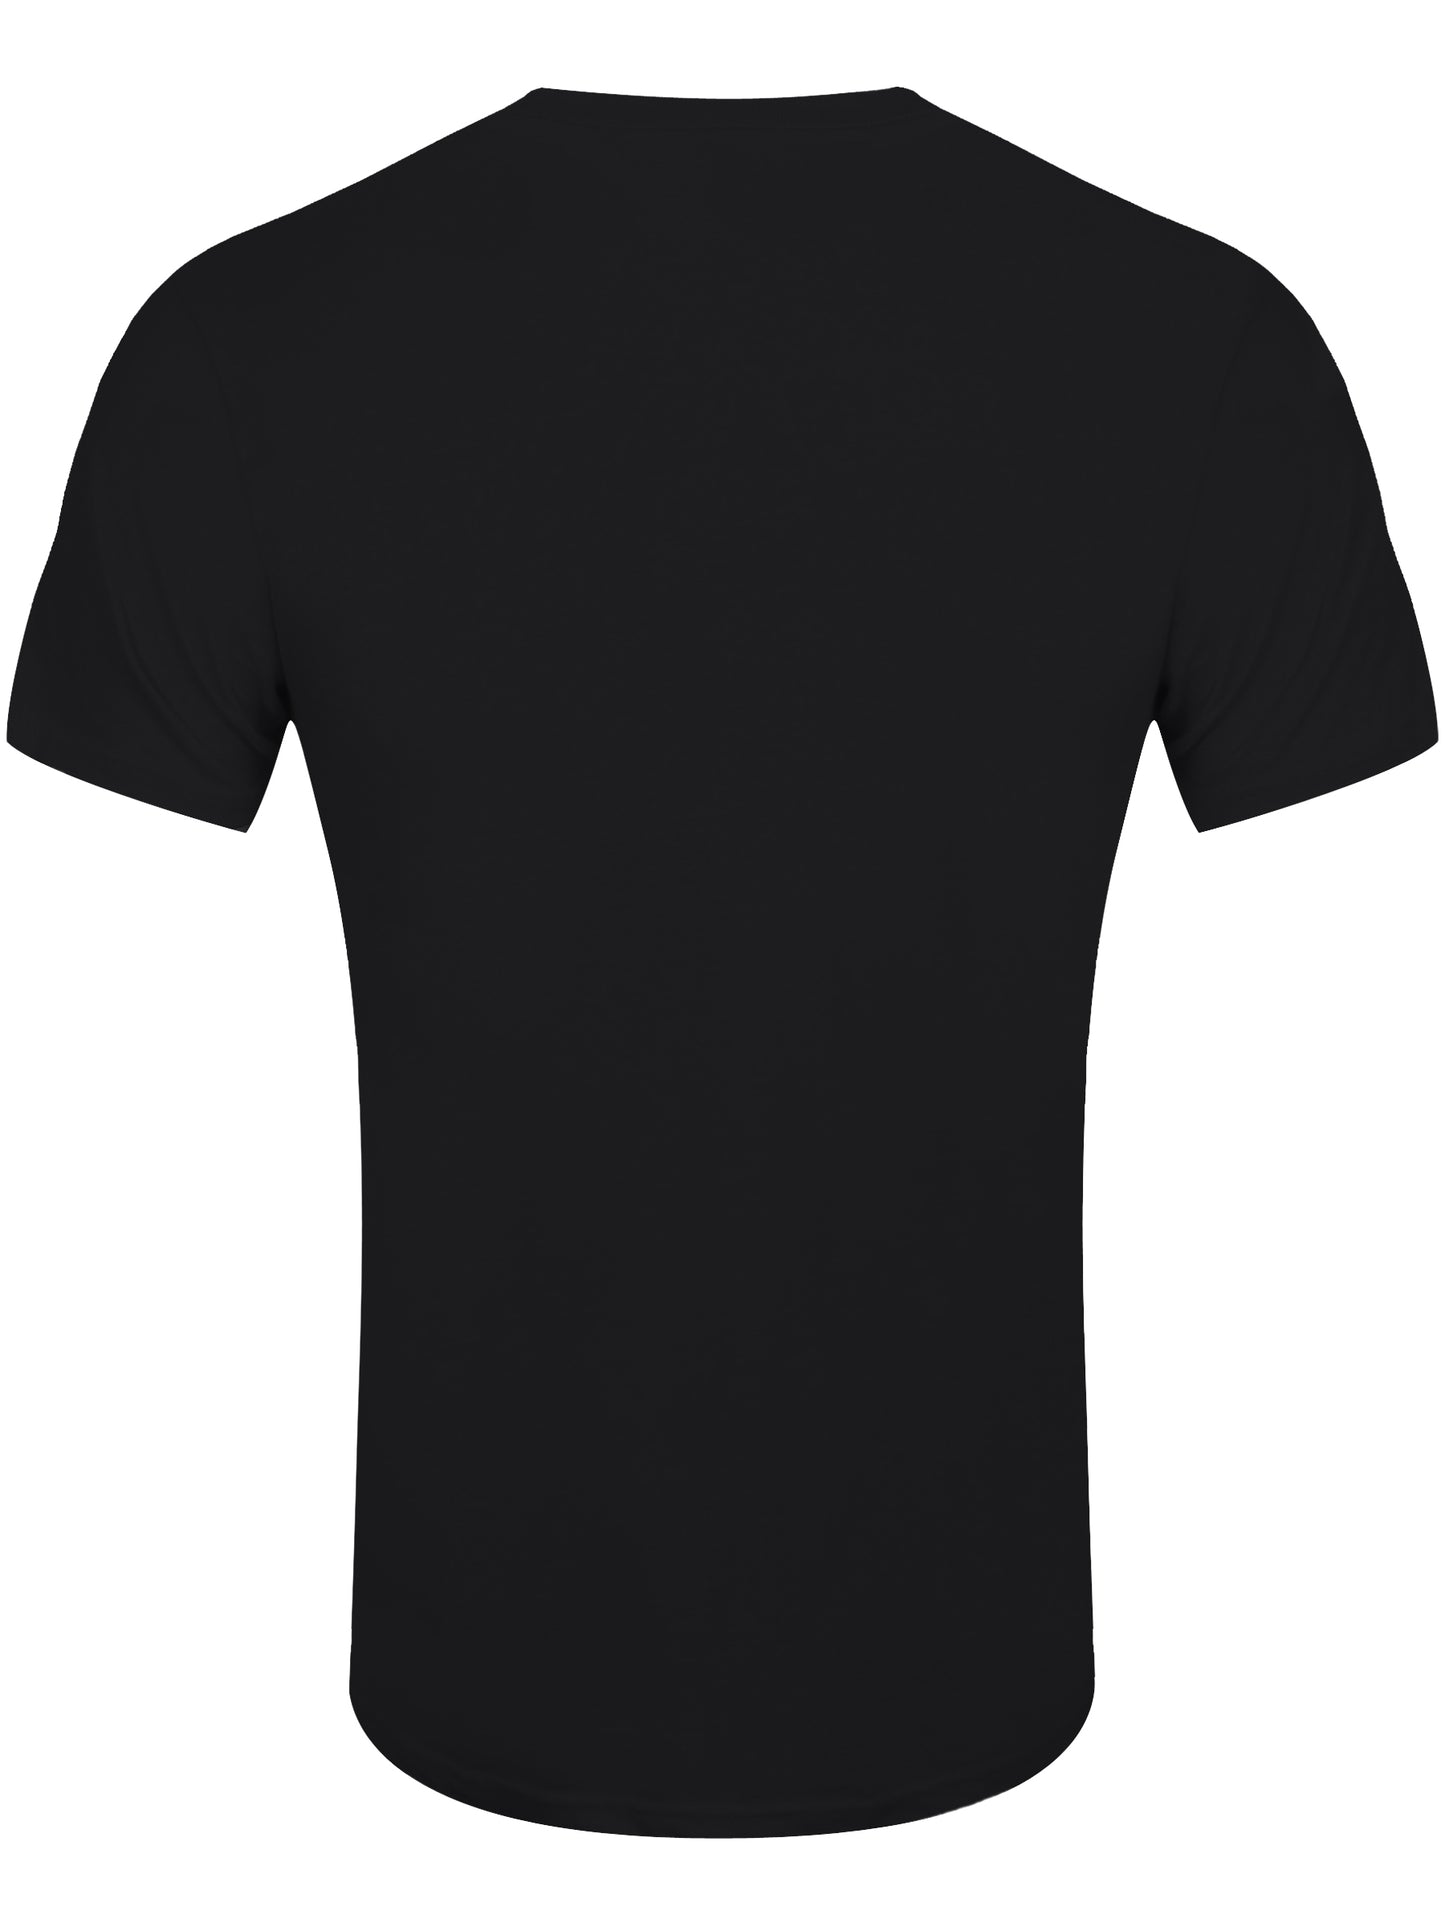 Friday the 13th - Jason Pop Art Men's Black T-Shirt